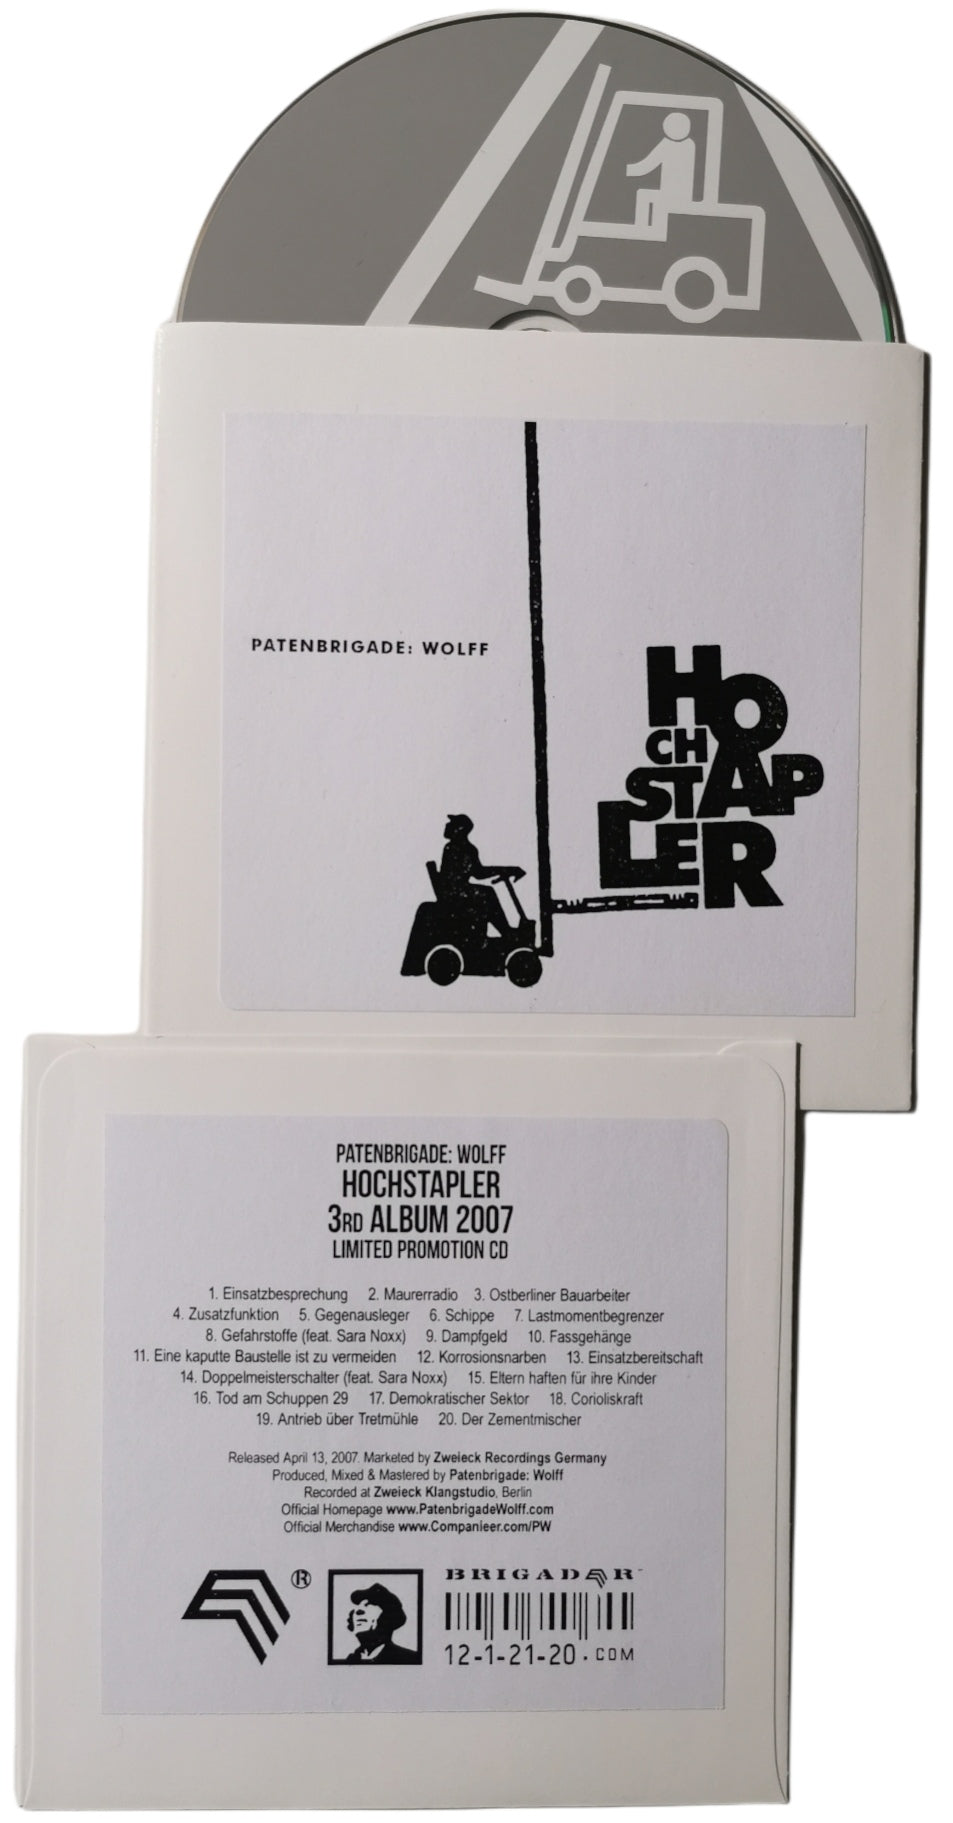 Hochstapler (DJ Promo CD) Patenbrigade: Wolff